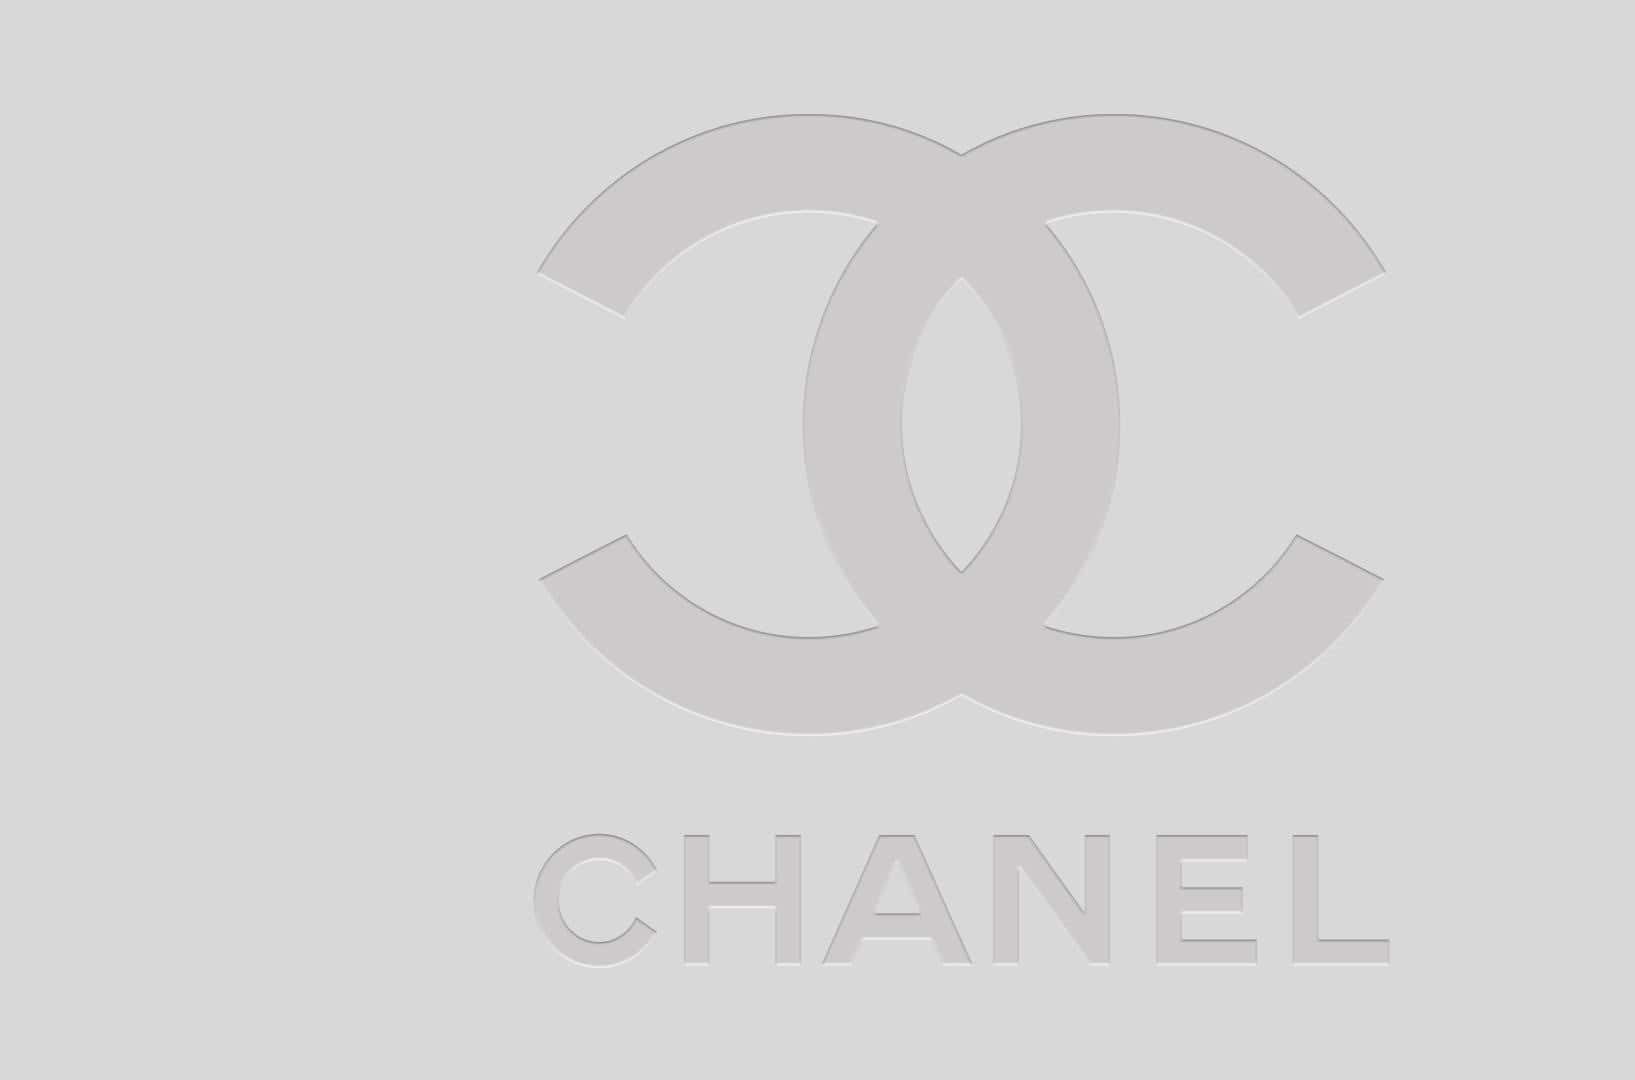 The iconic Chanel logo with its interlocking Cs.